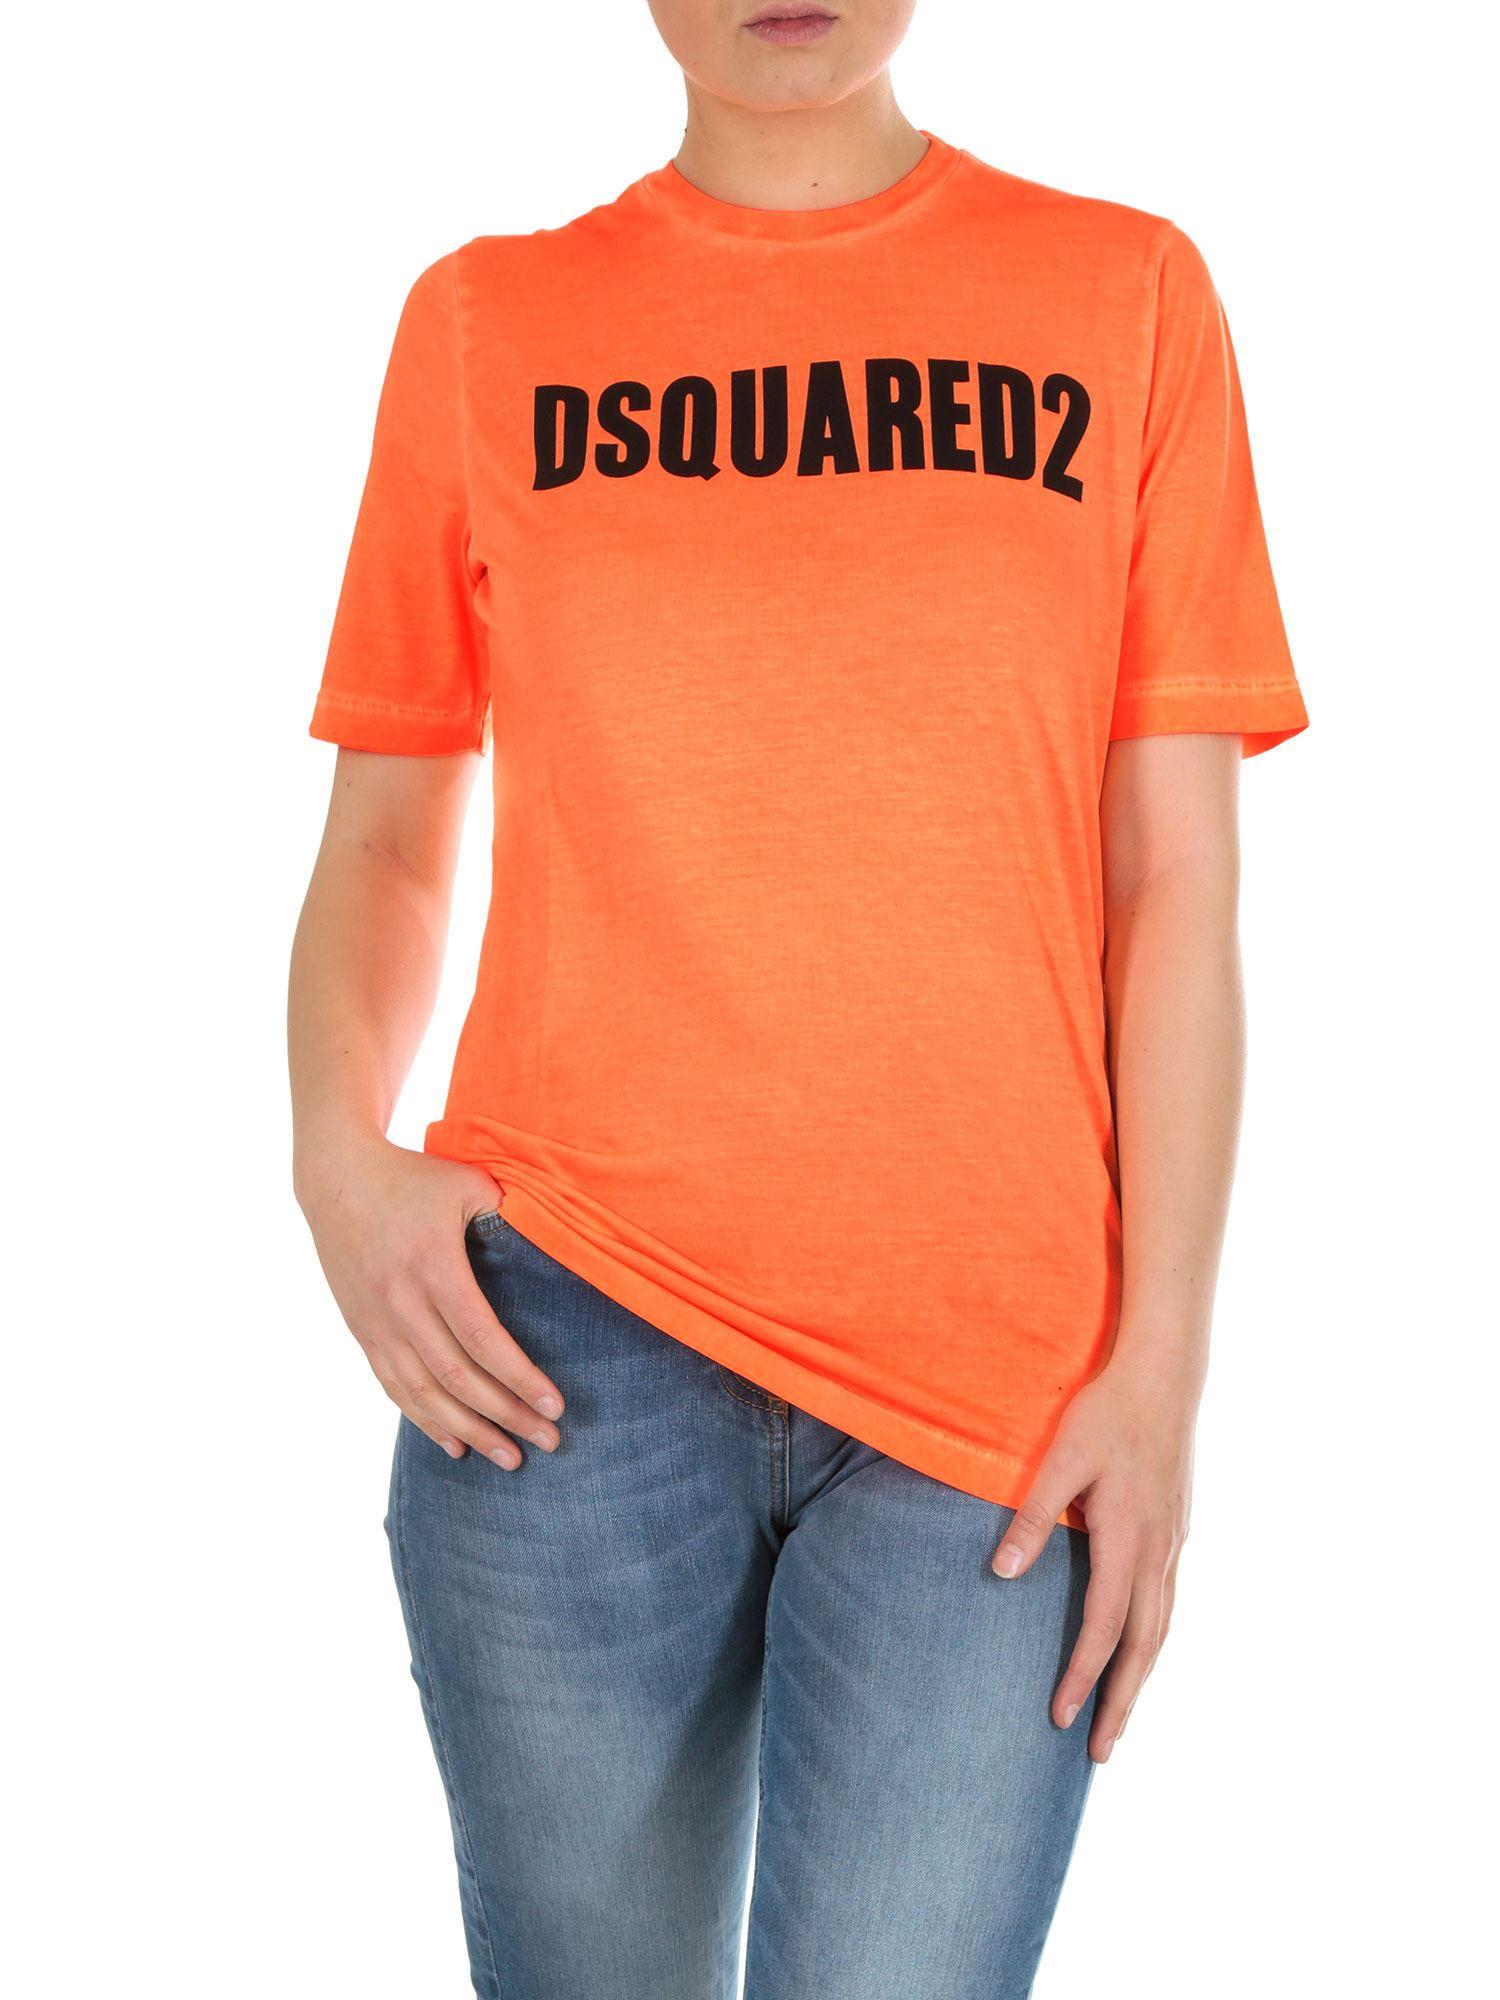 dsquared shirt orange